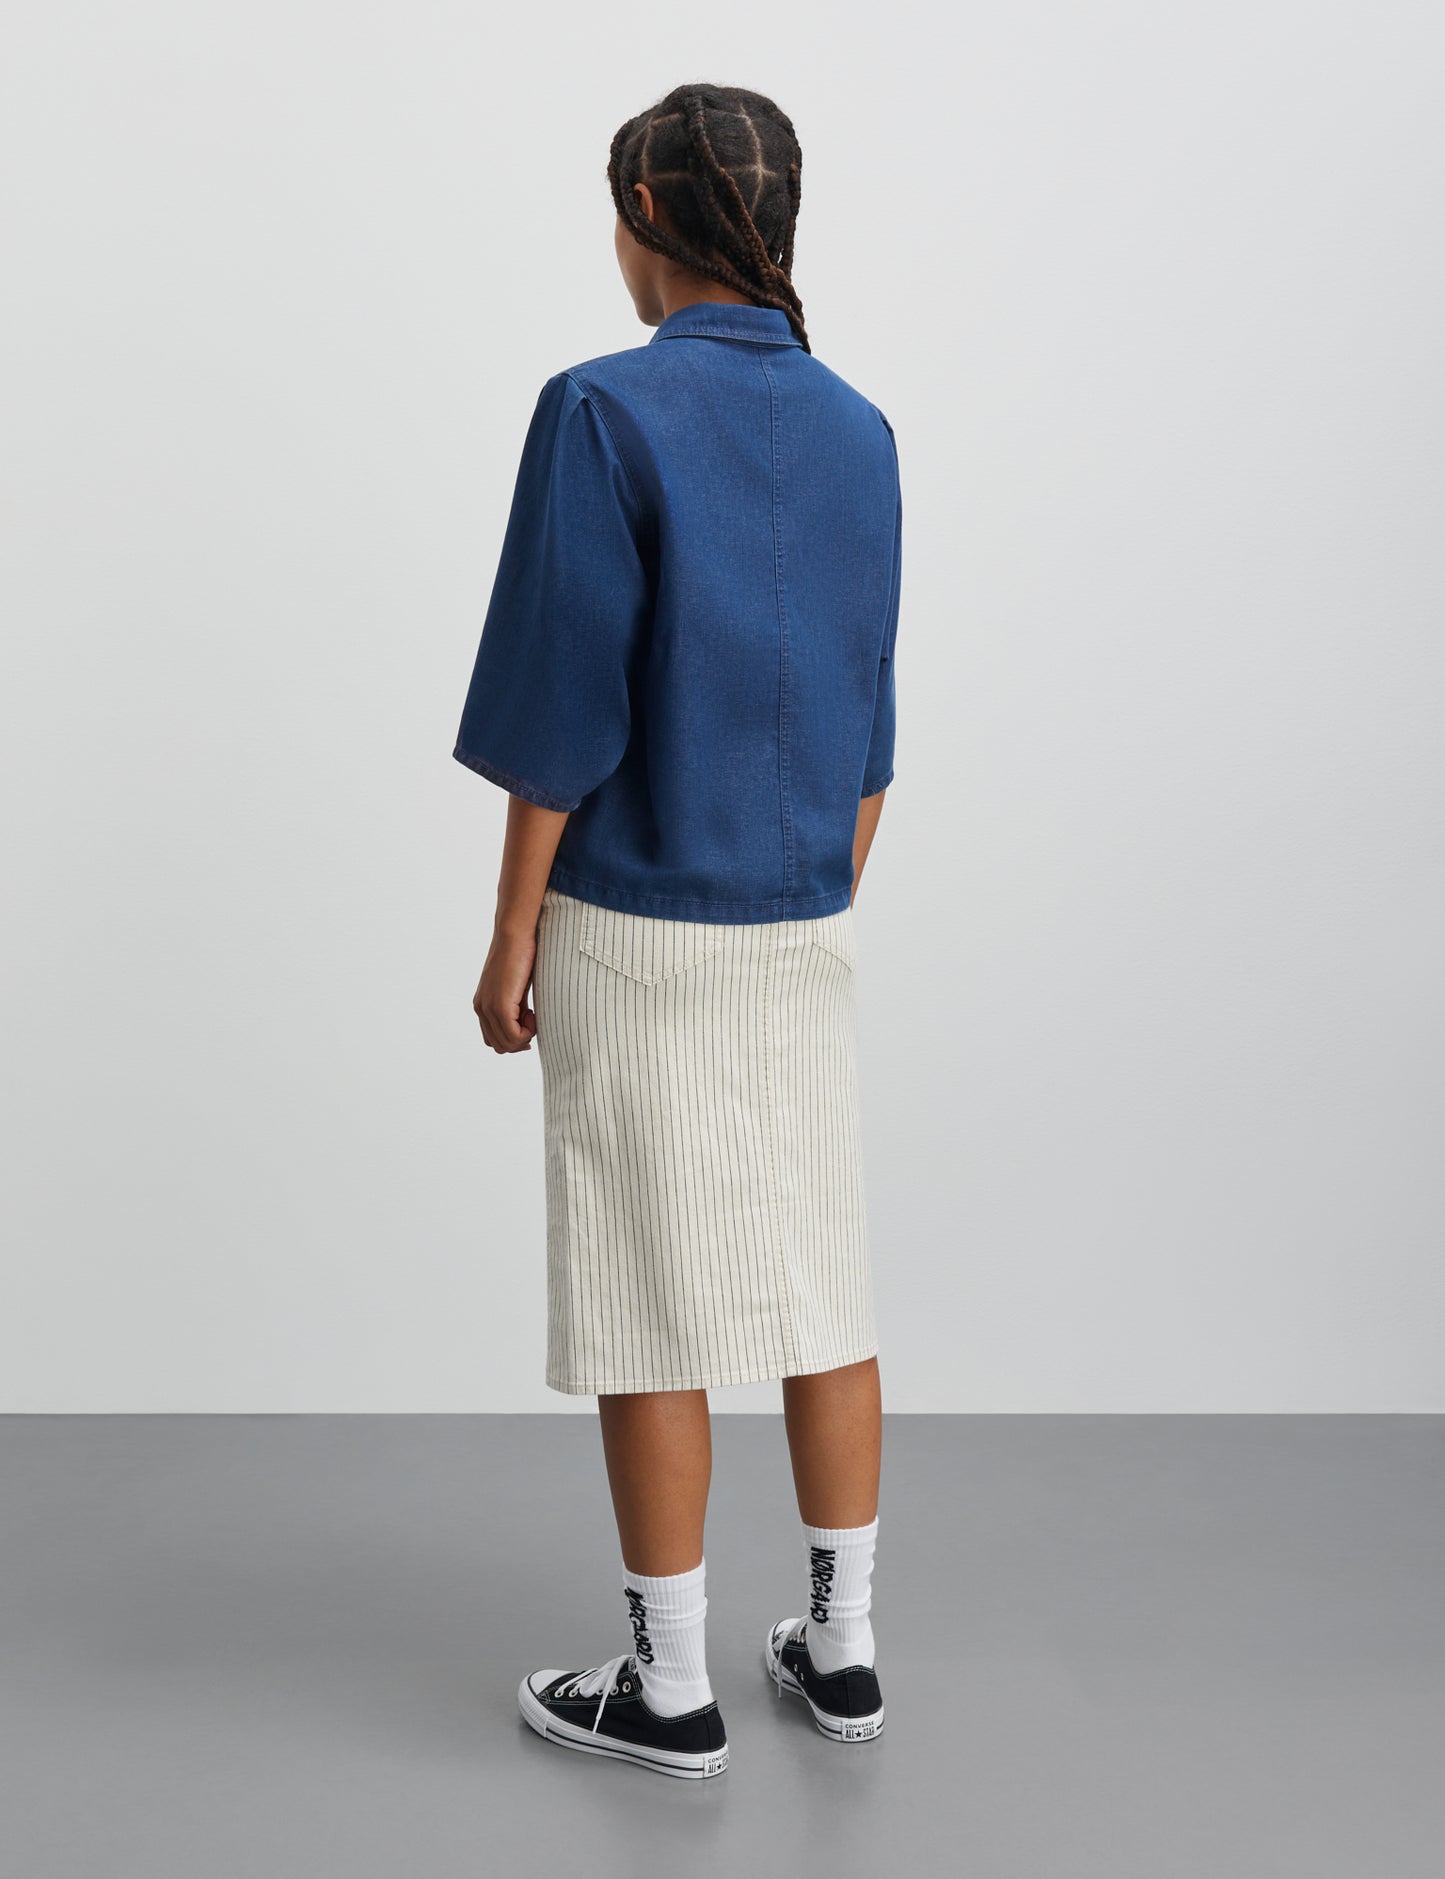 Field Pin Kenley Skirt, Whitecap Gray